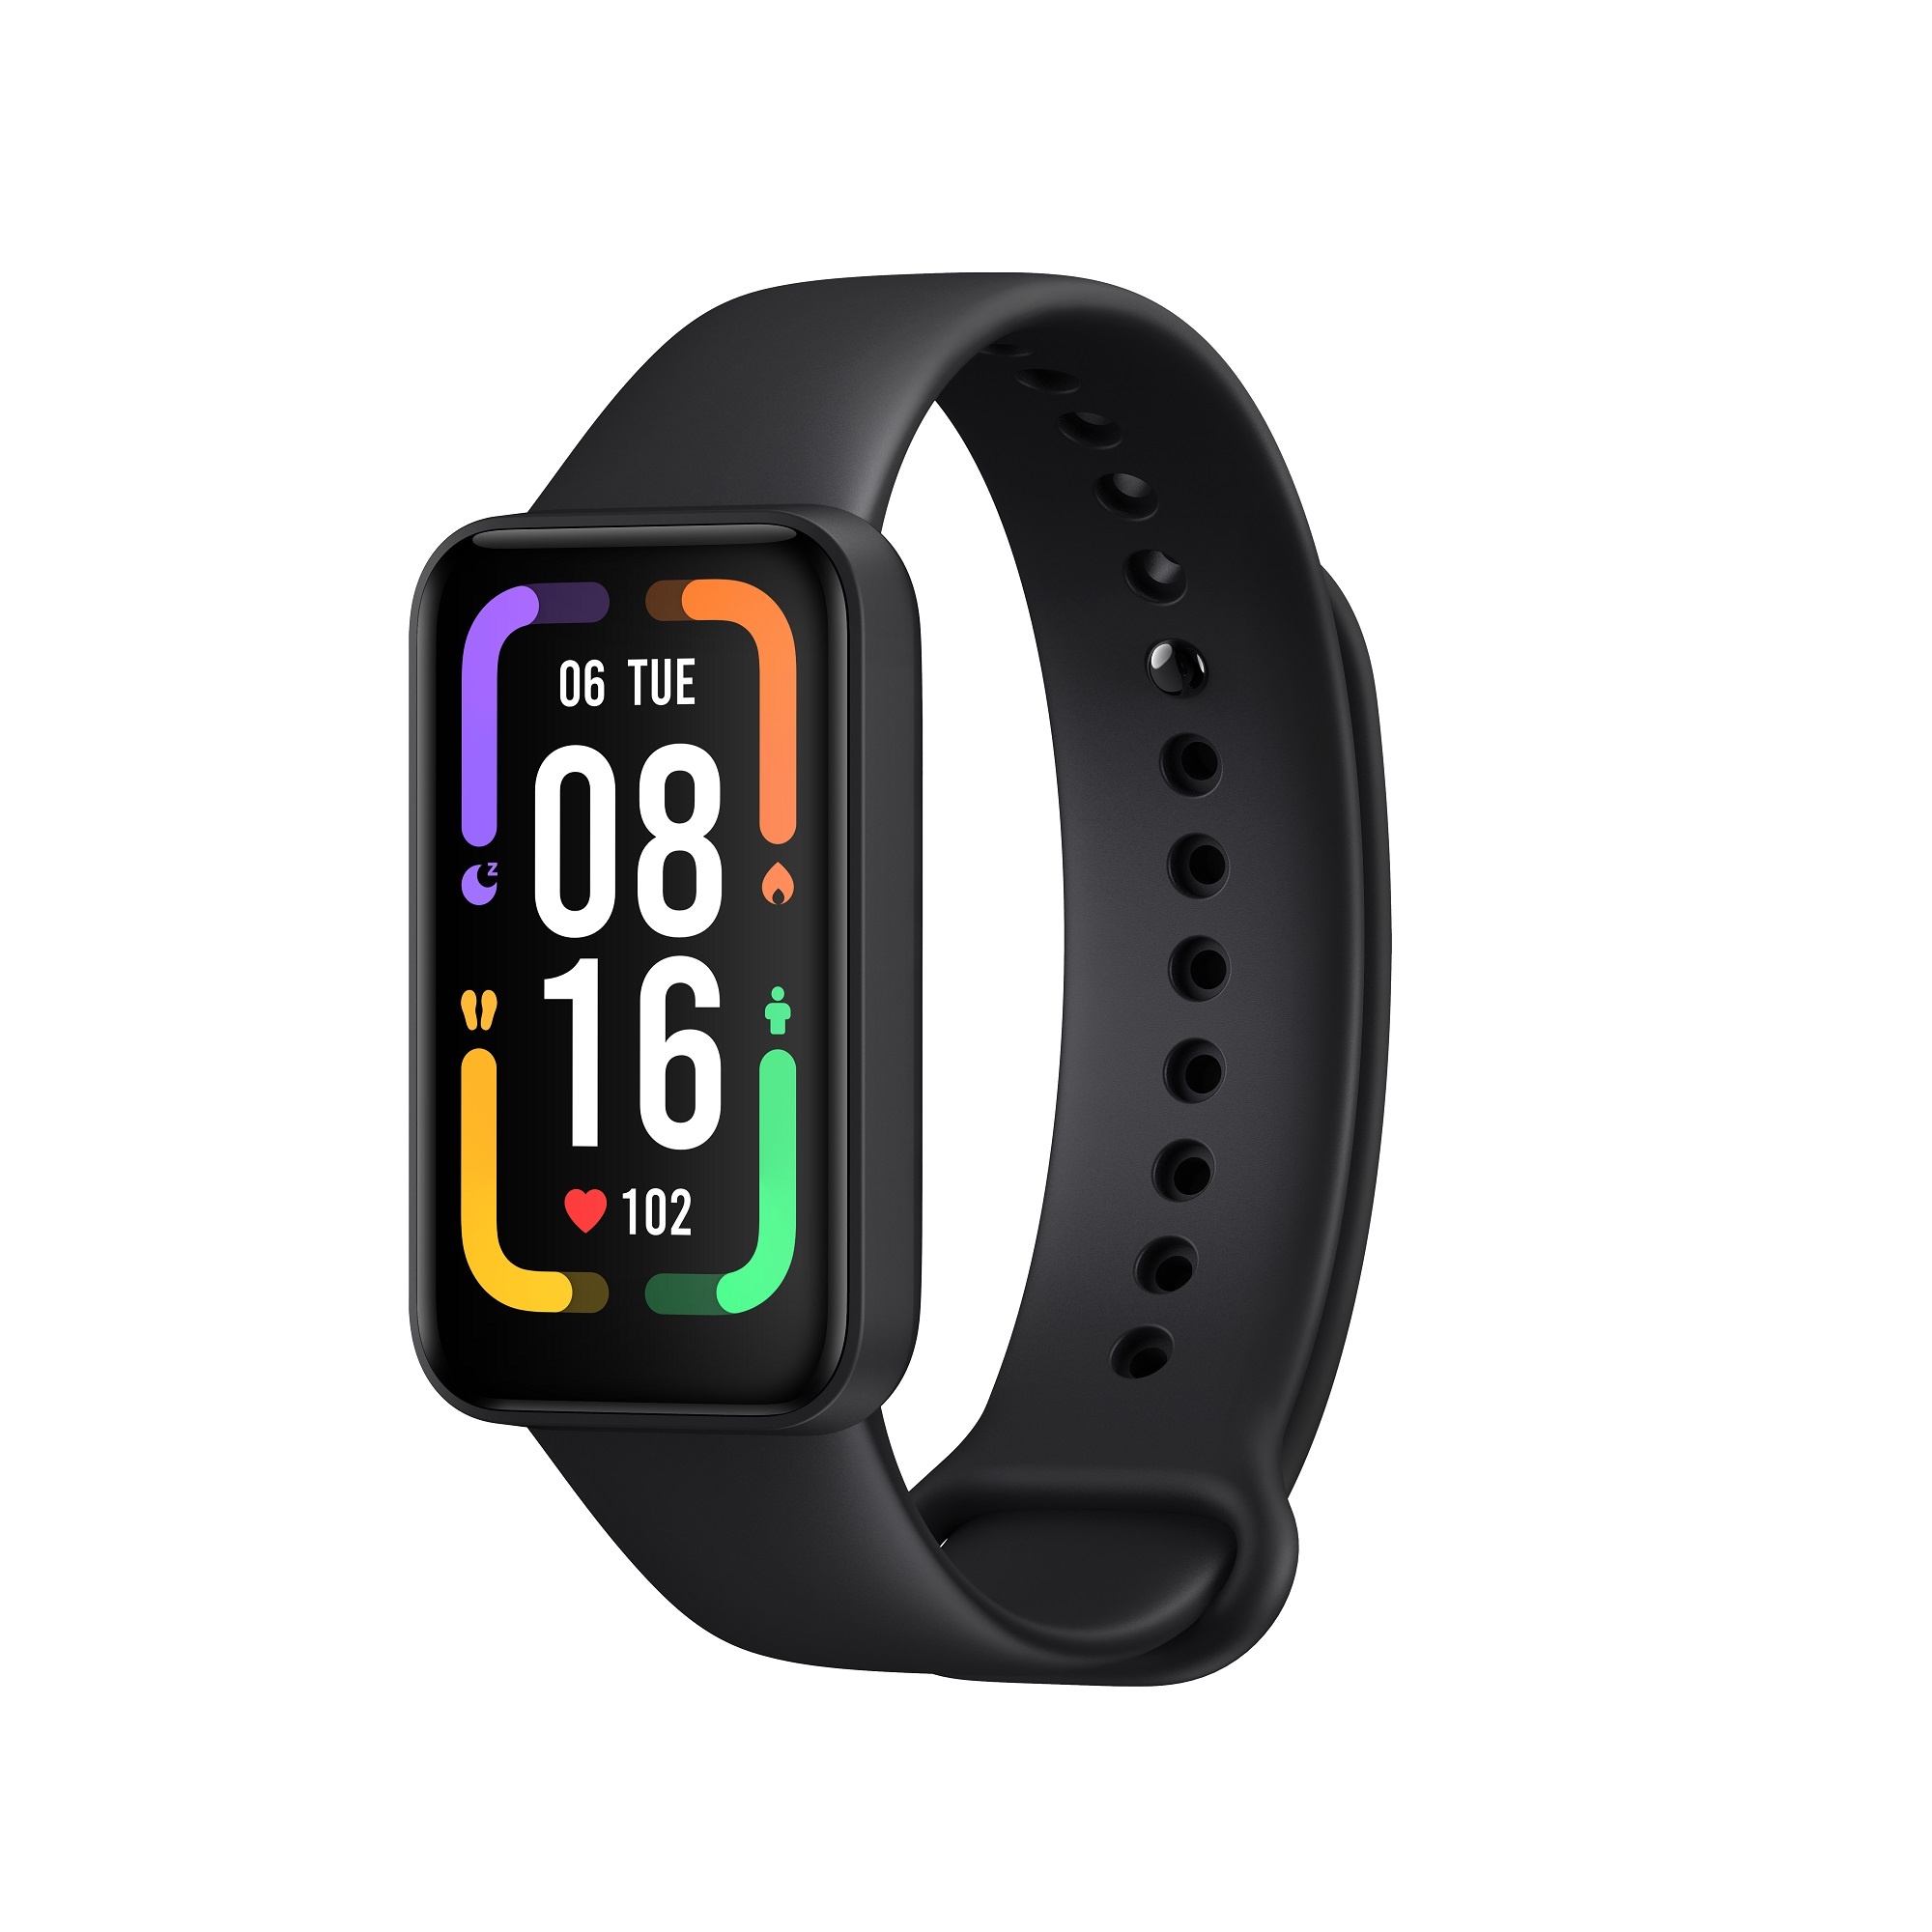 Huawei Honor S1 Bluetooth 4.2 Heart Rate Smart Watch-Long Strap